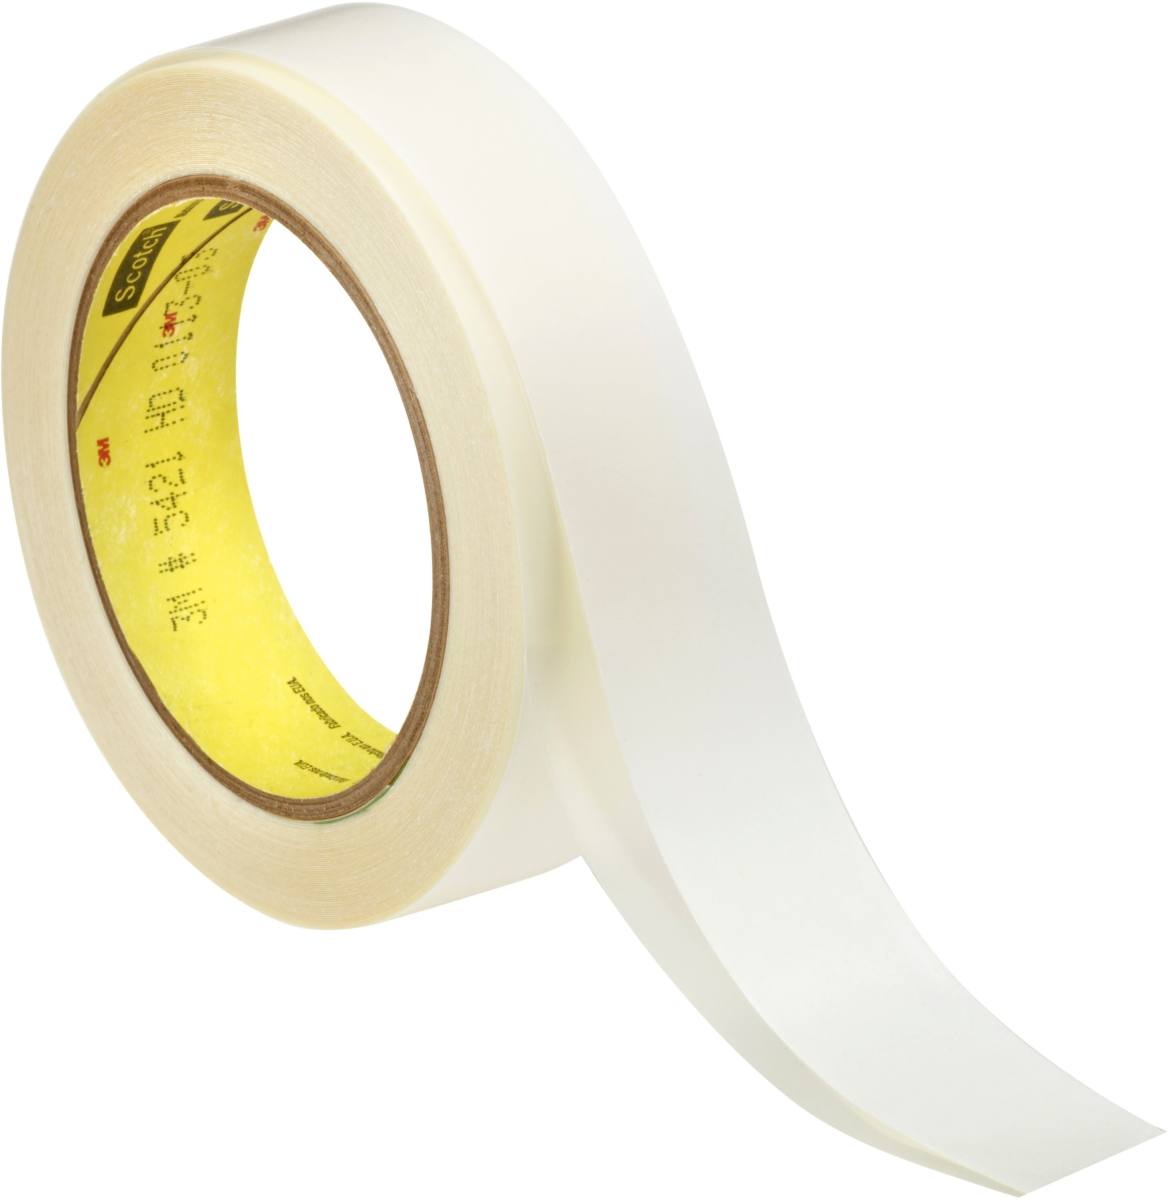 3M 5421 UHMW polyethylene sliding tape 9mmx16.5m, 0.17mm, rubber / resin